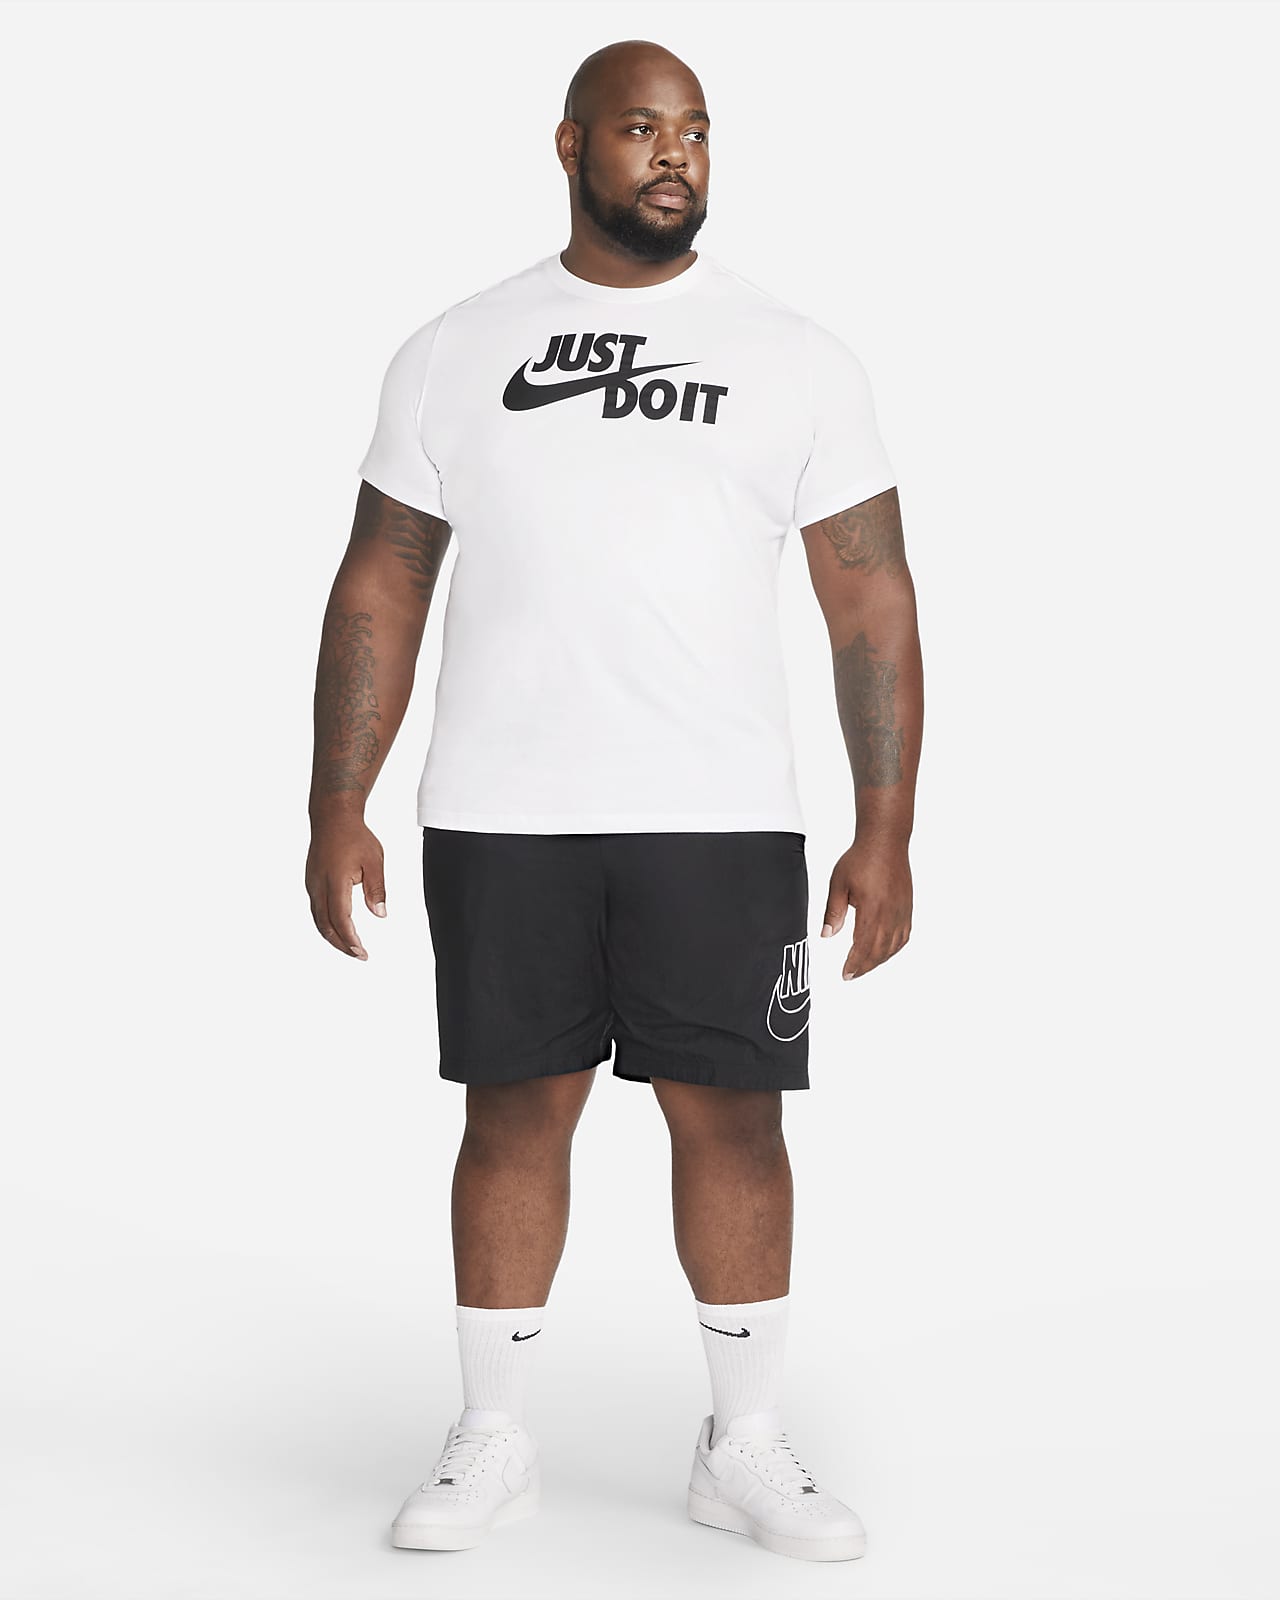 Nike Sportswear Air Max Men's T-Shirt. Nike ZA